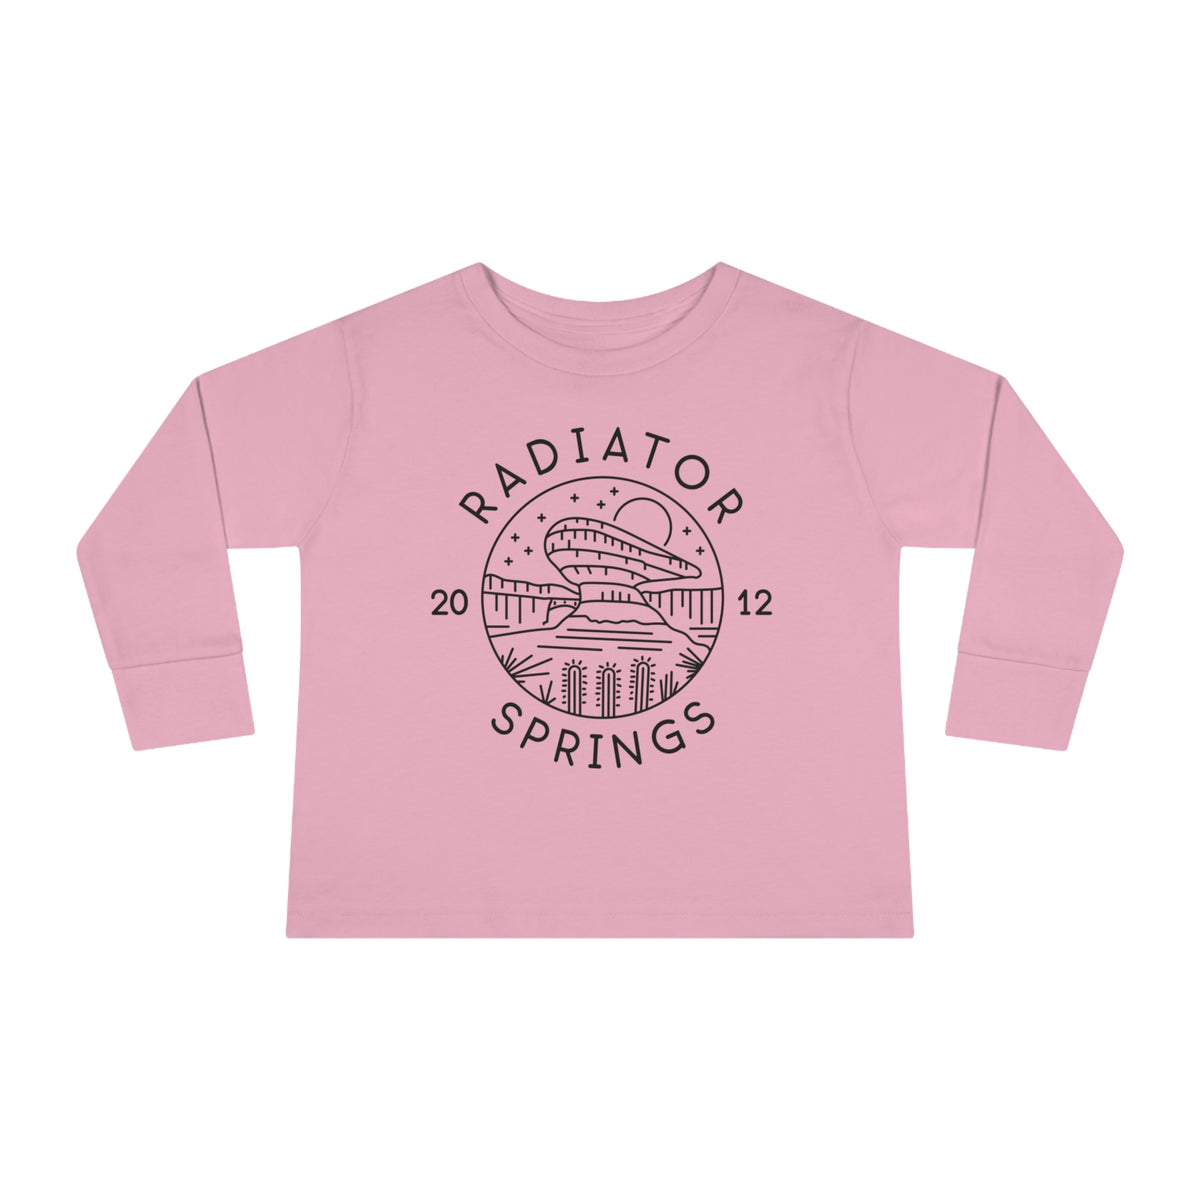 Radiator Springs Rabbit Skins Toddler Long Sleeve Tee